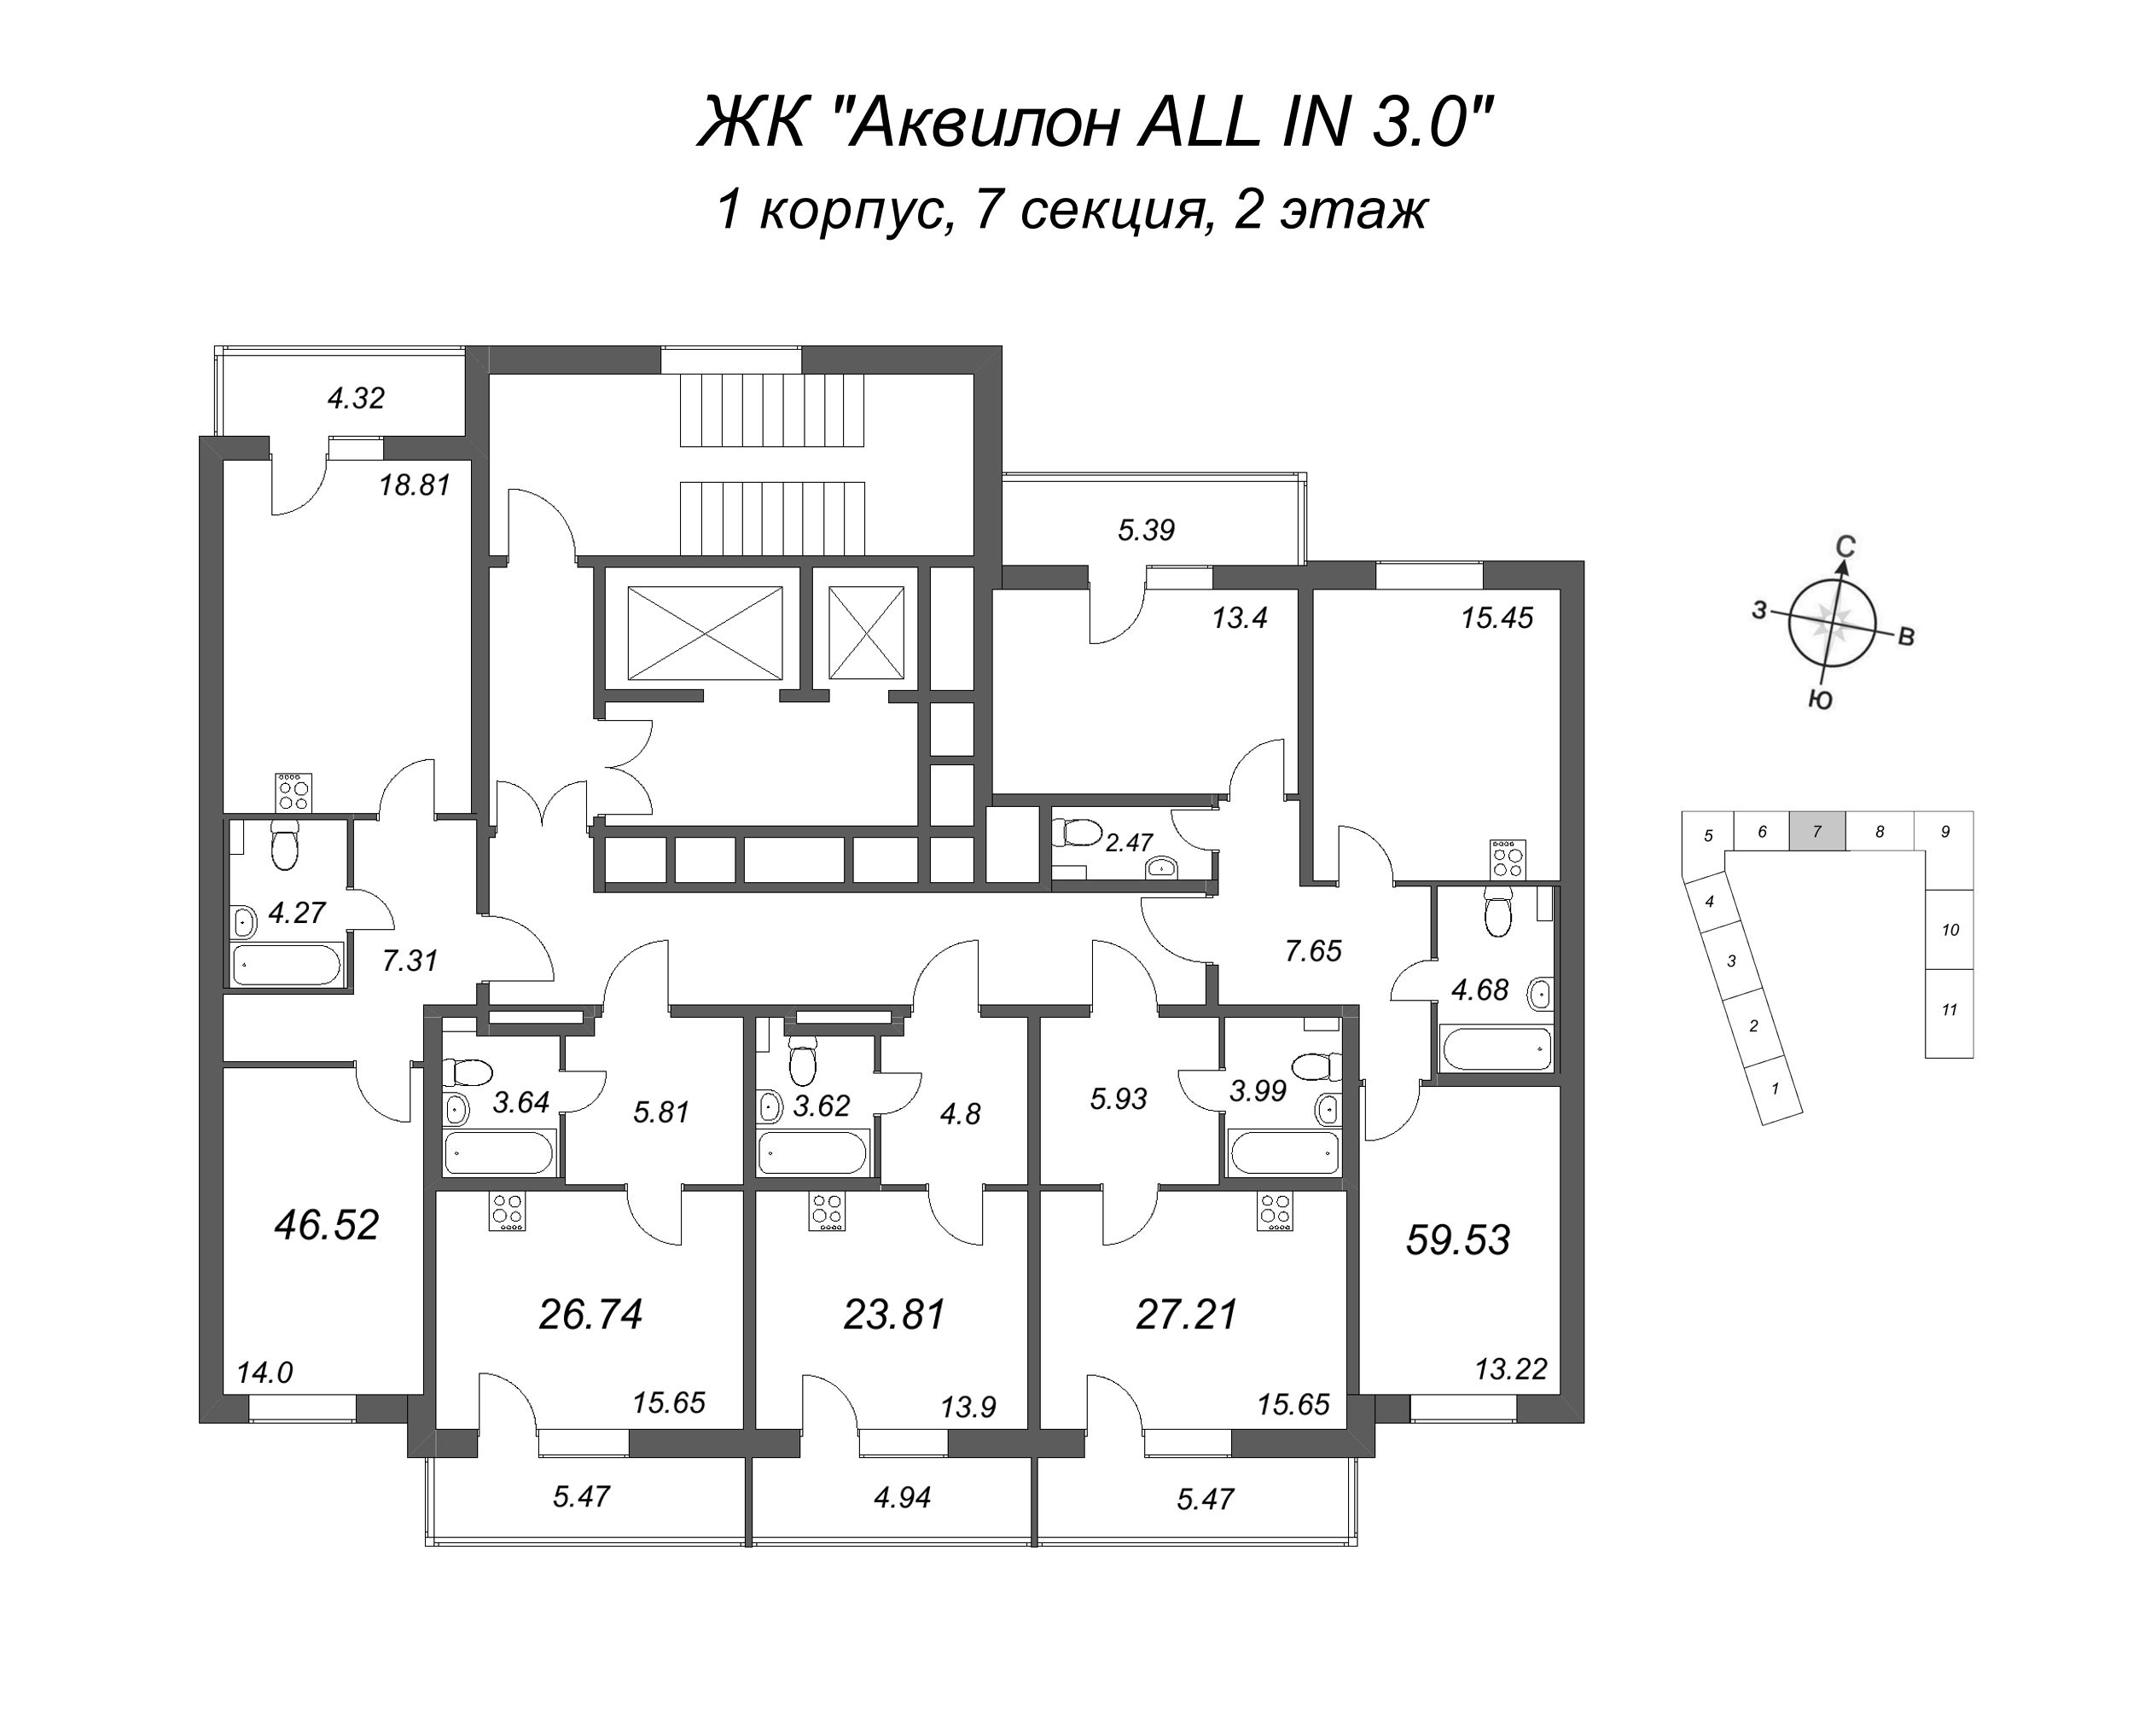 2-комнатная (Евро) квартира, 46.52 м² - планировка этажа